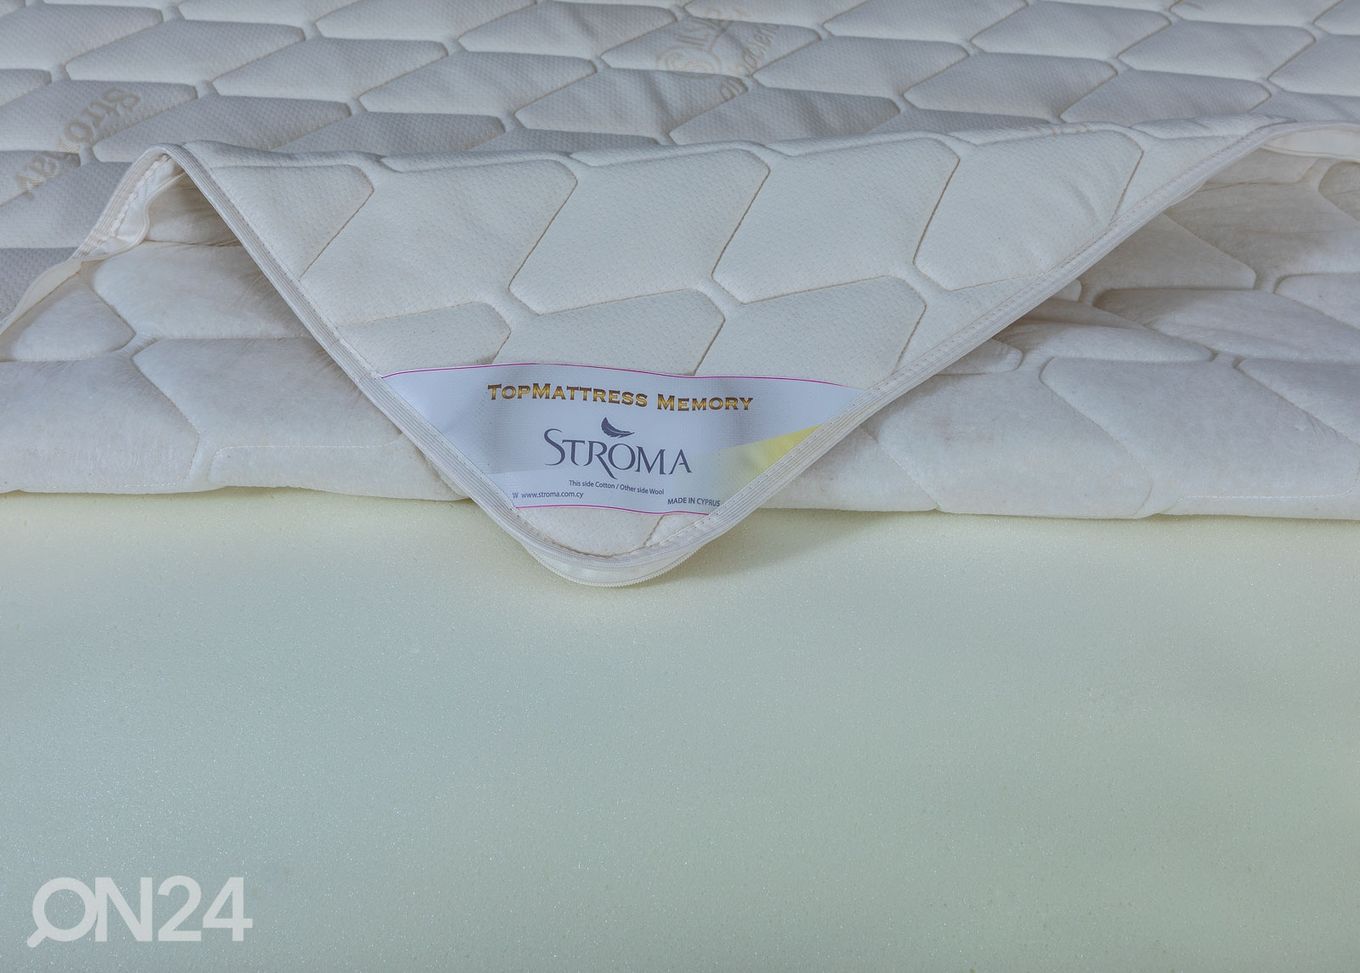 Stroma kattemadrats Top Memory 200x200x5 cm suurendatud